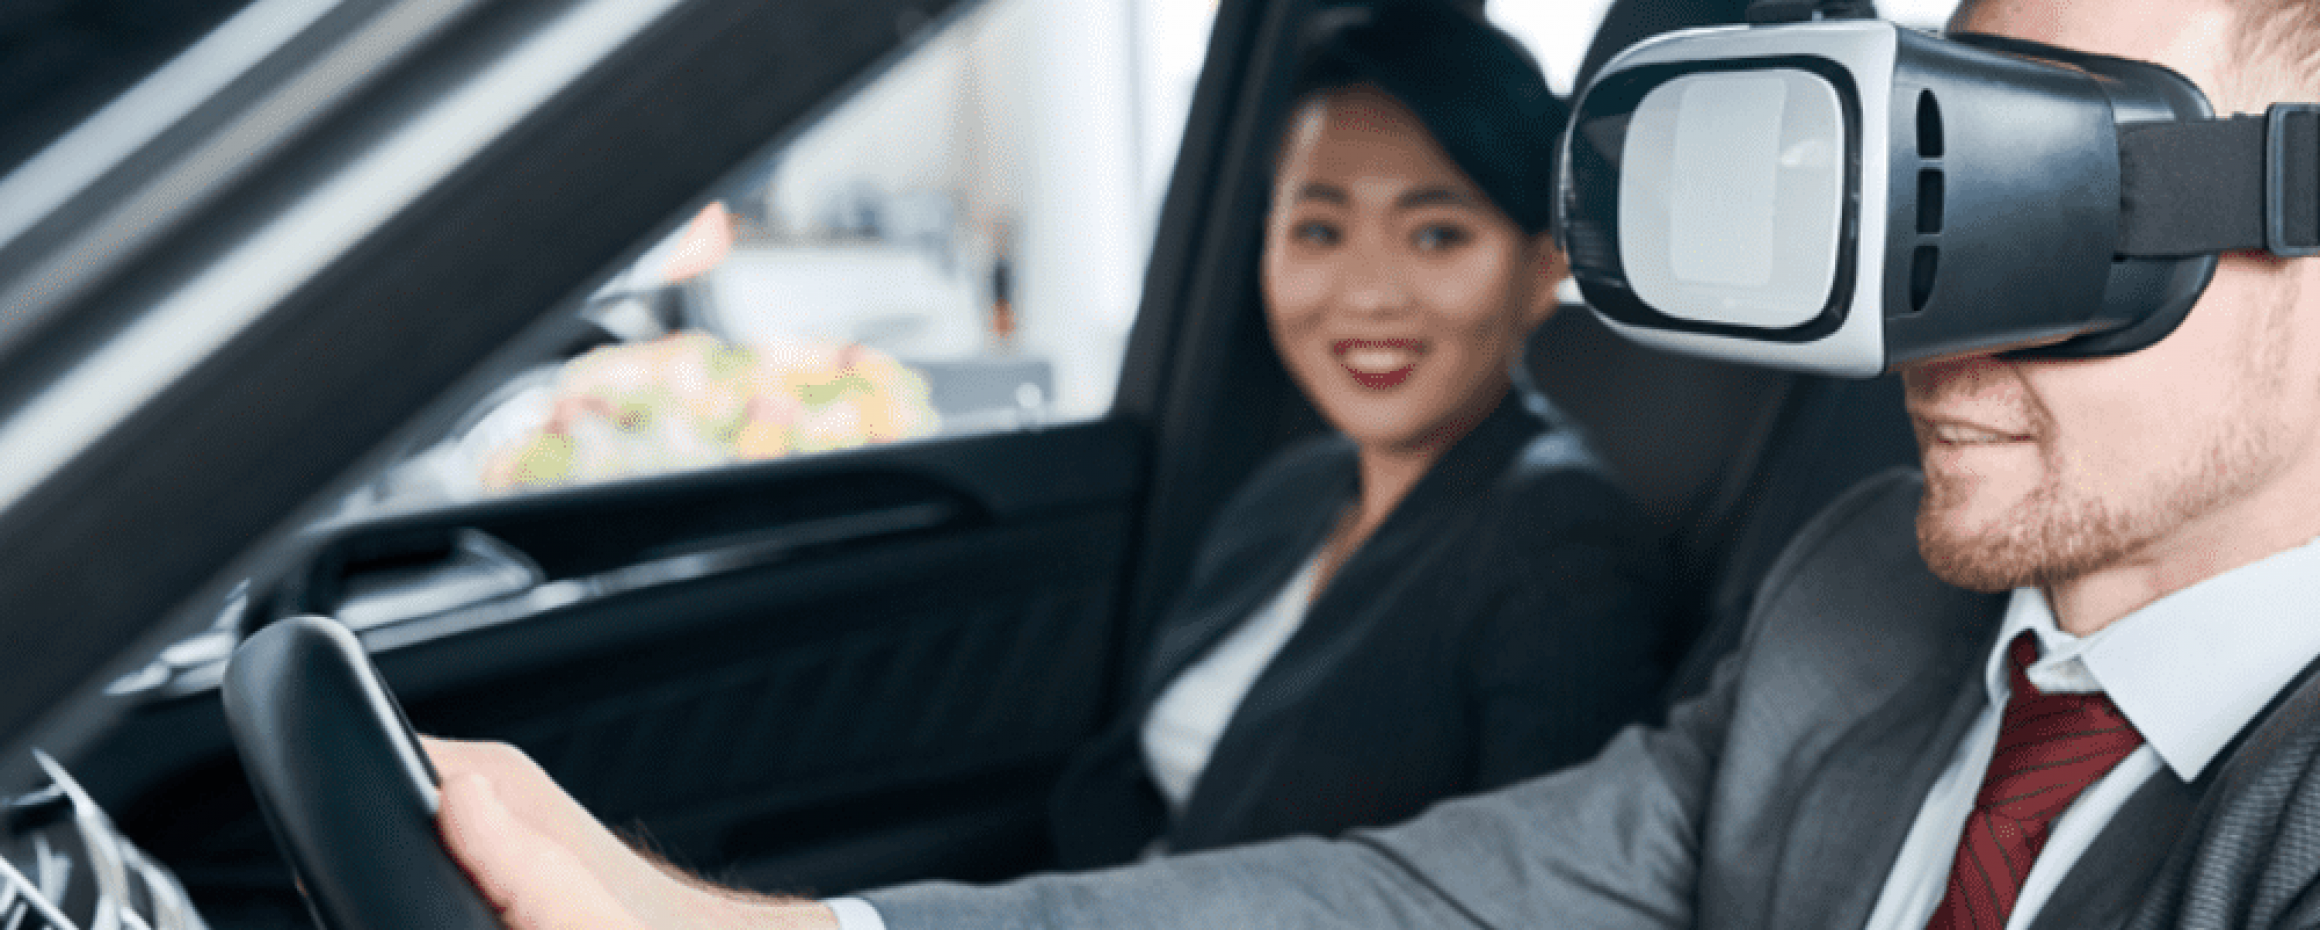 Virtuelle Produkttrainings in der Automobilindustrie